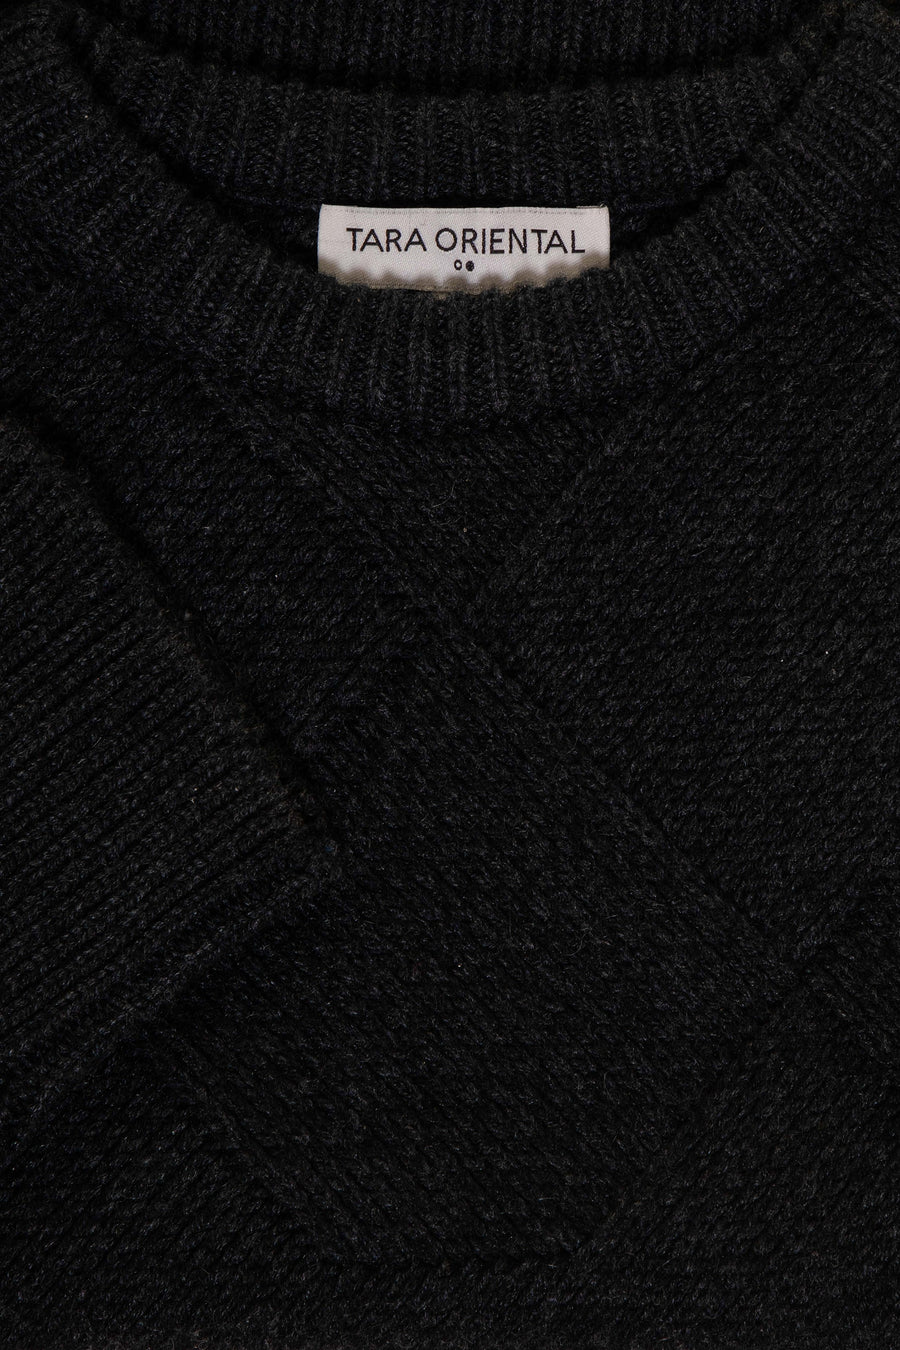 Men's Wool Cashmere Lattice Top